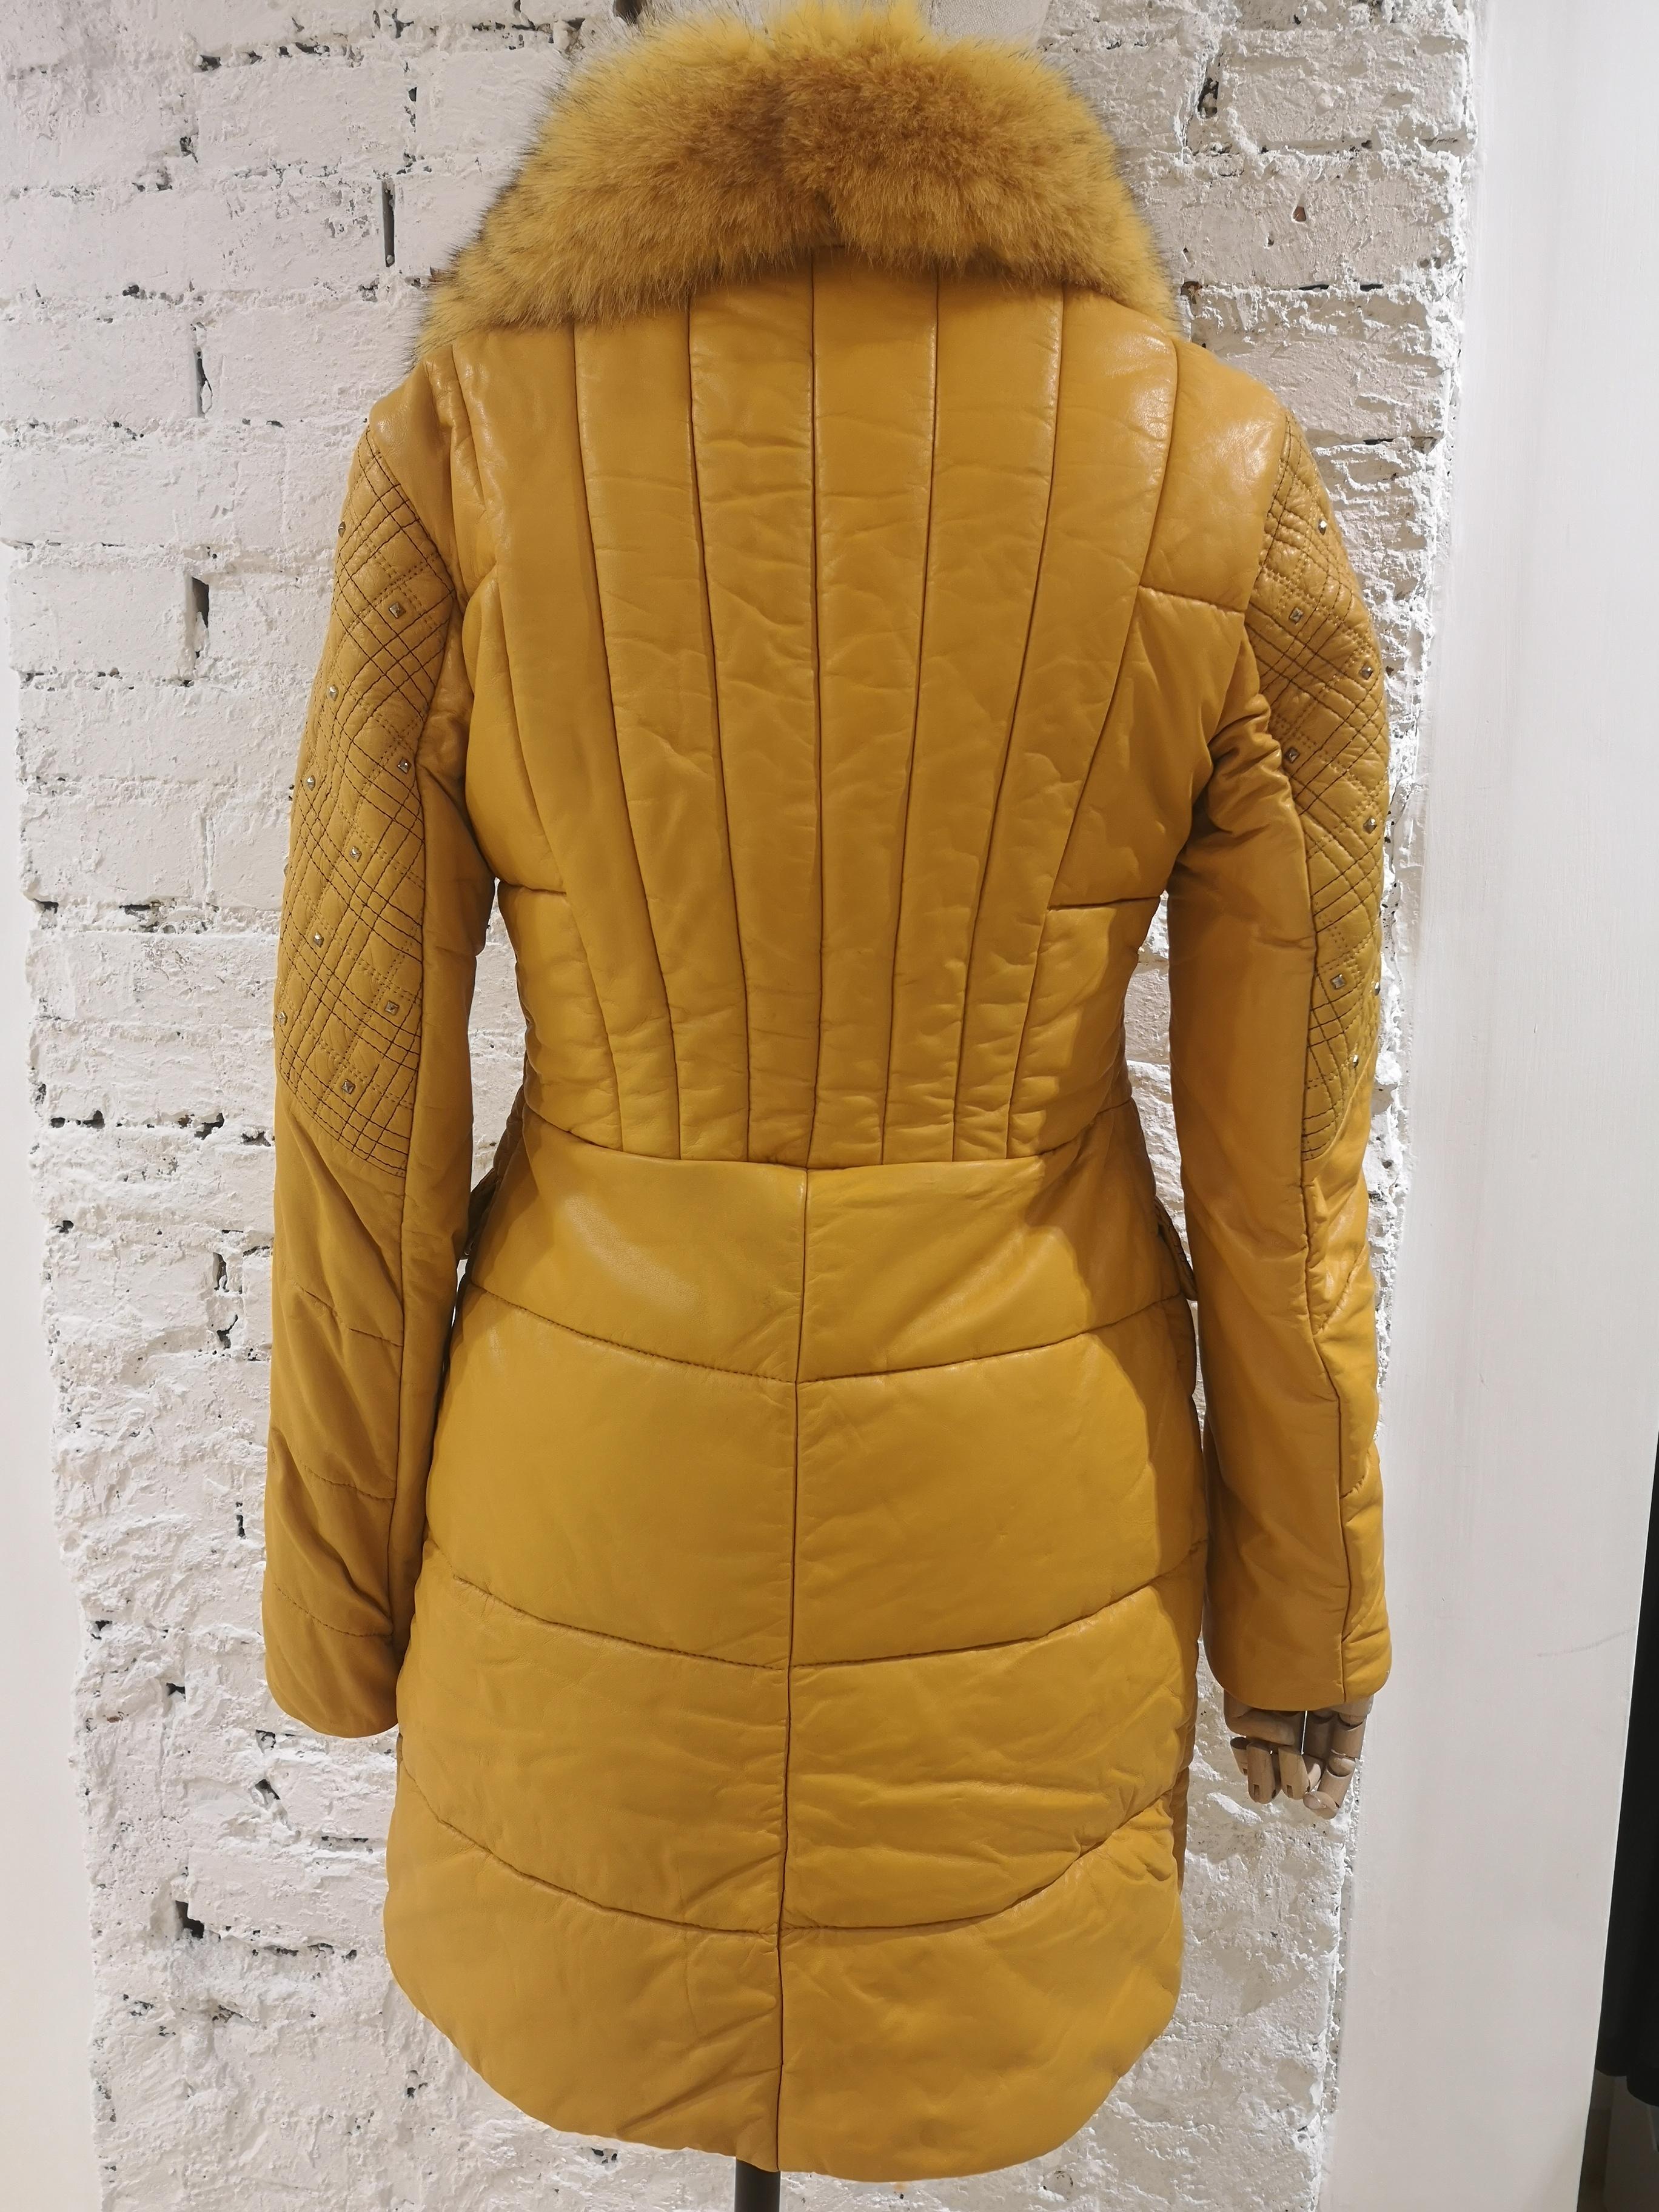 Gianni Versace Leather Coat 11